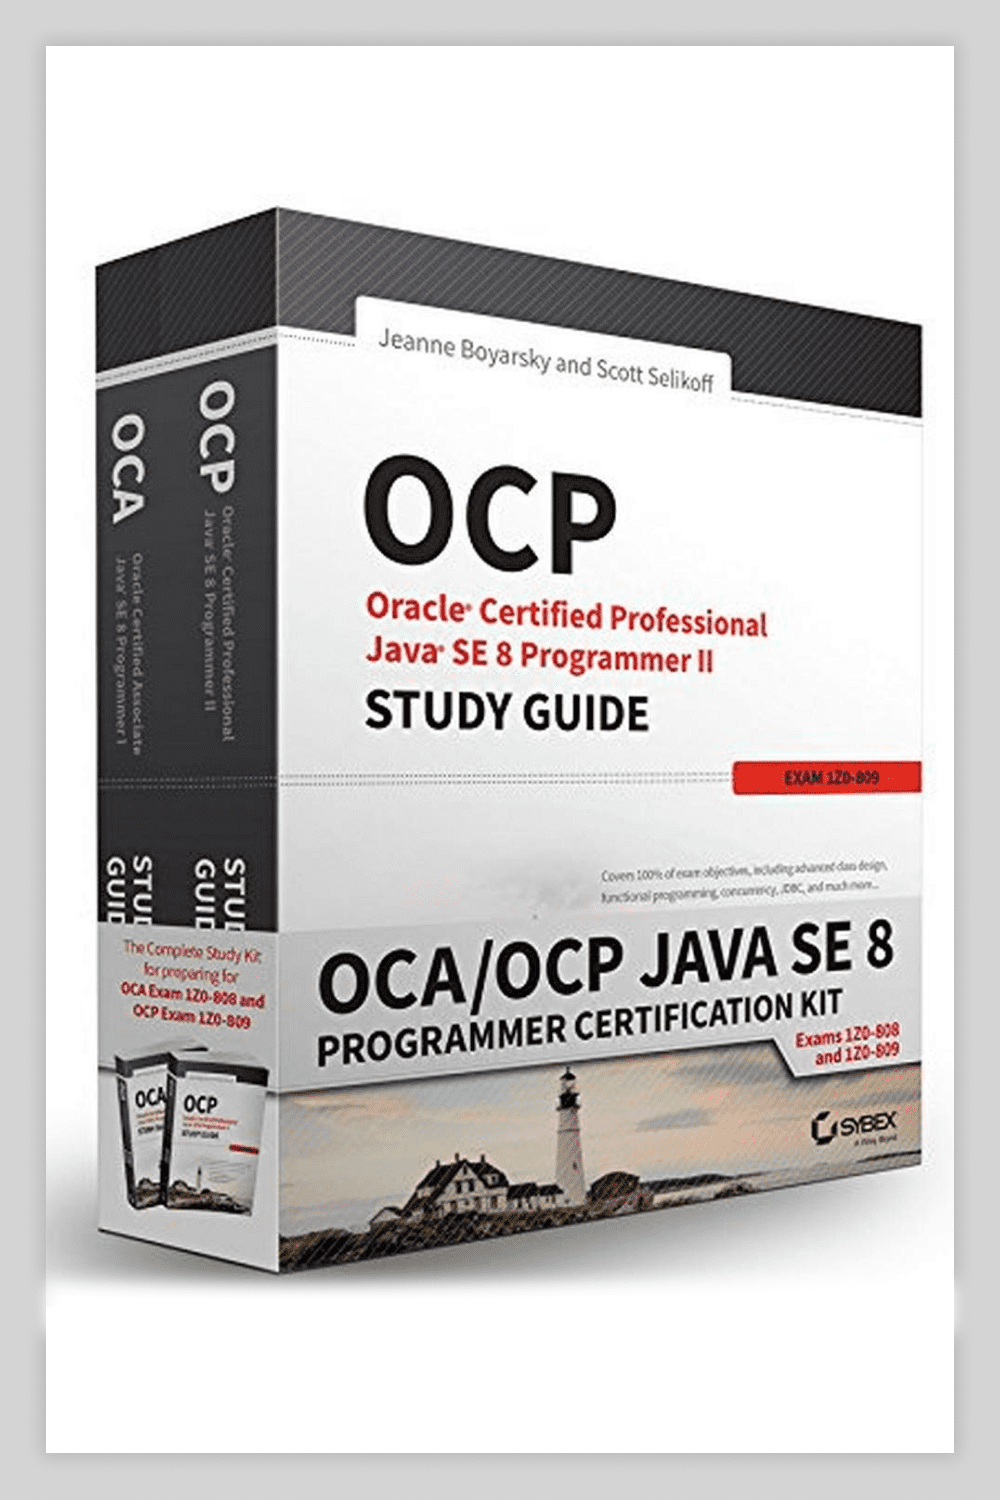 Photo of the OCA / OCP Java SE 8 Programmer Certification Kit.